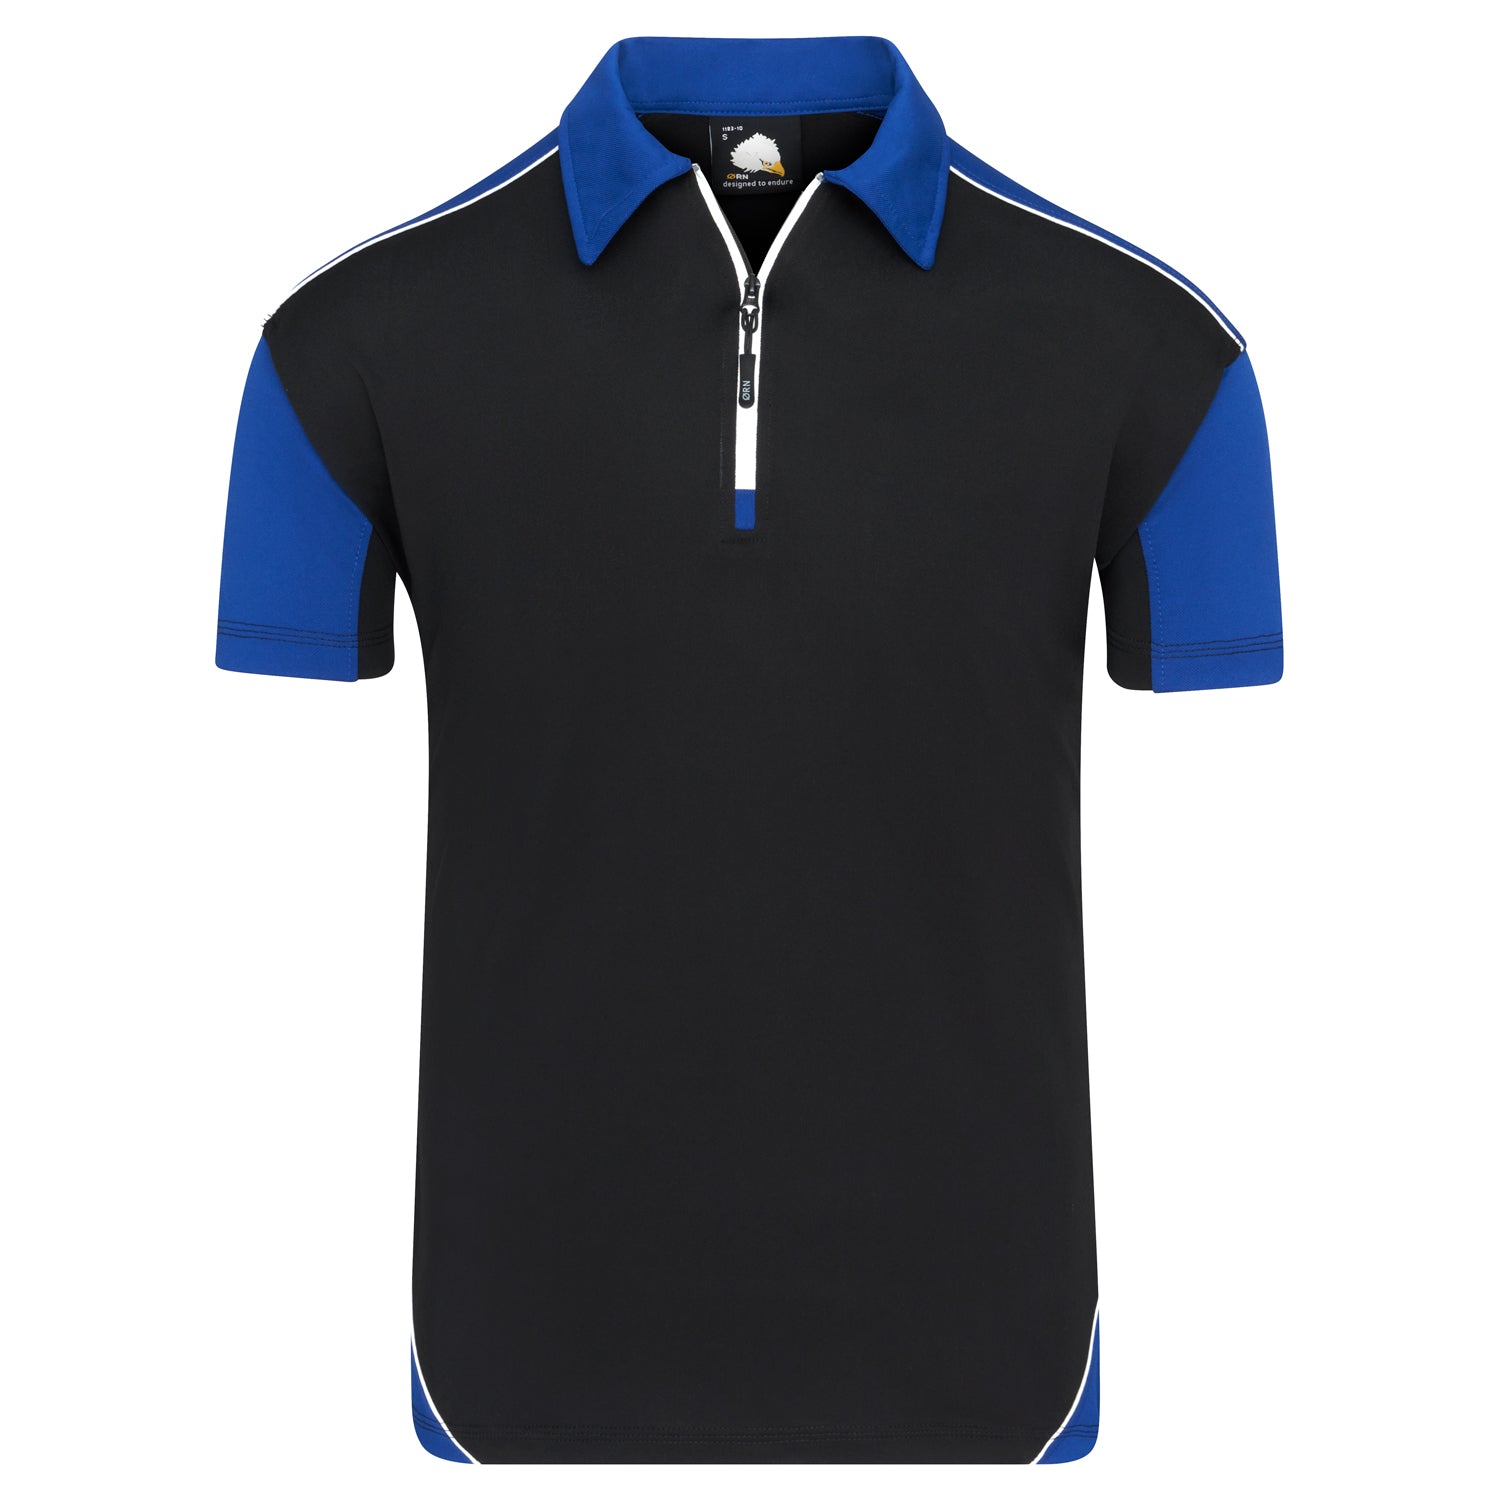 ORN Fireback Wicking Poloshirt - Black/Royal Blue